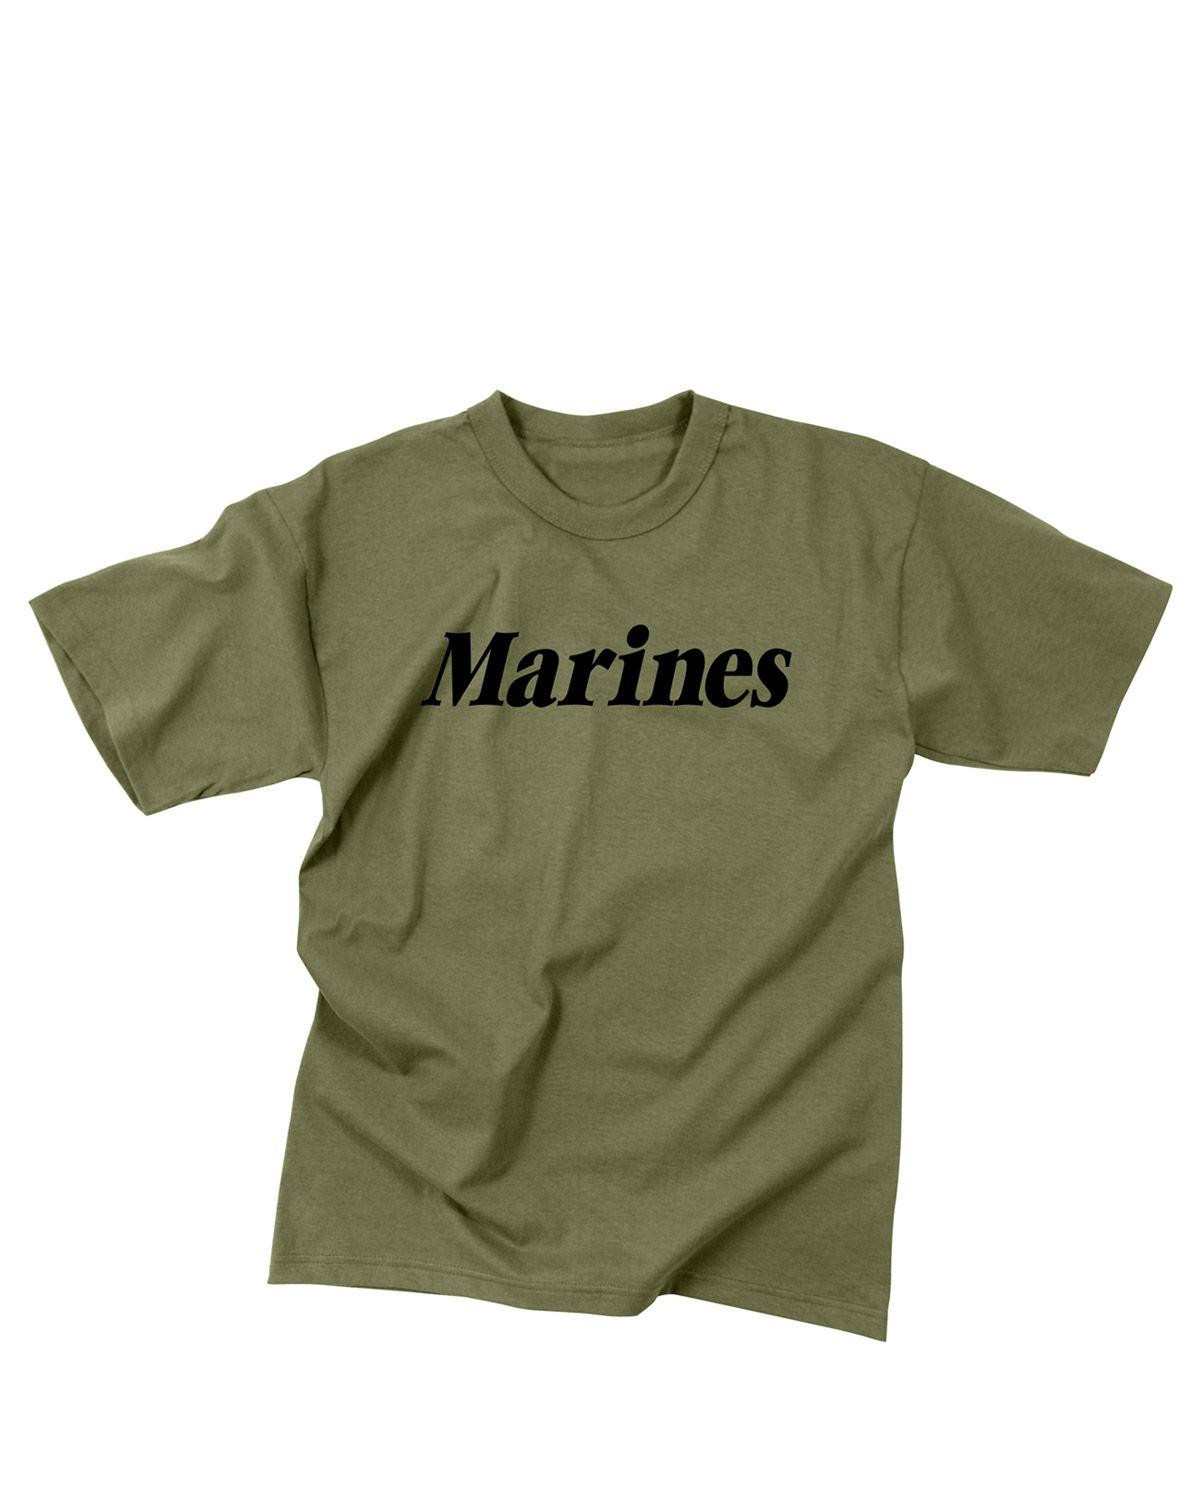 Rothco Physical Training T-shirt (Oliven m. Marines, XL)